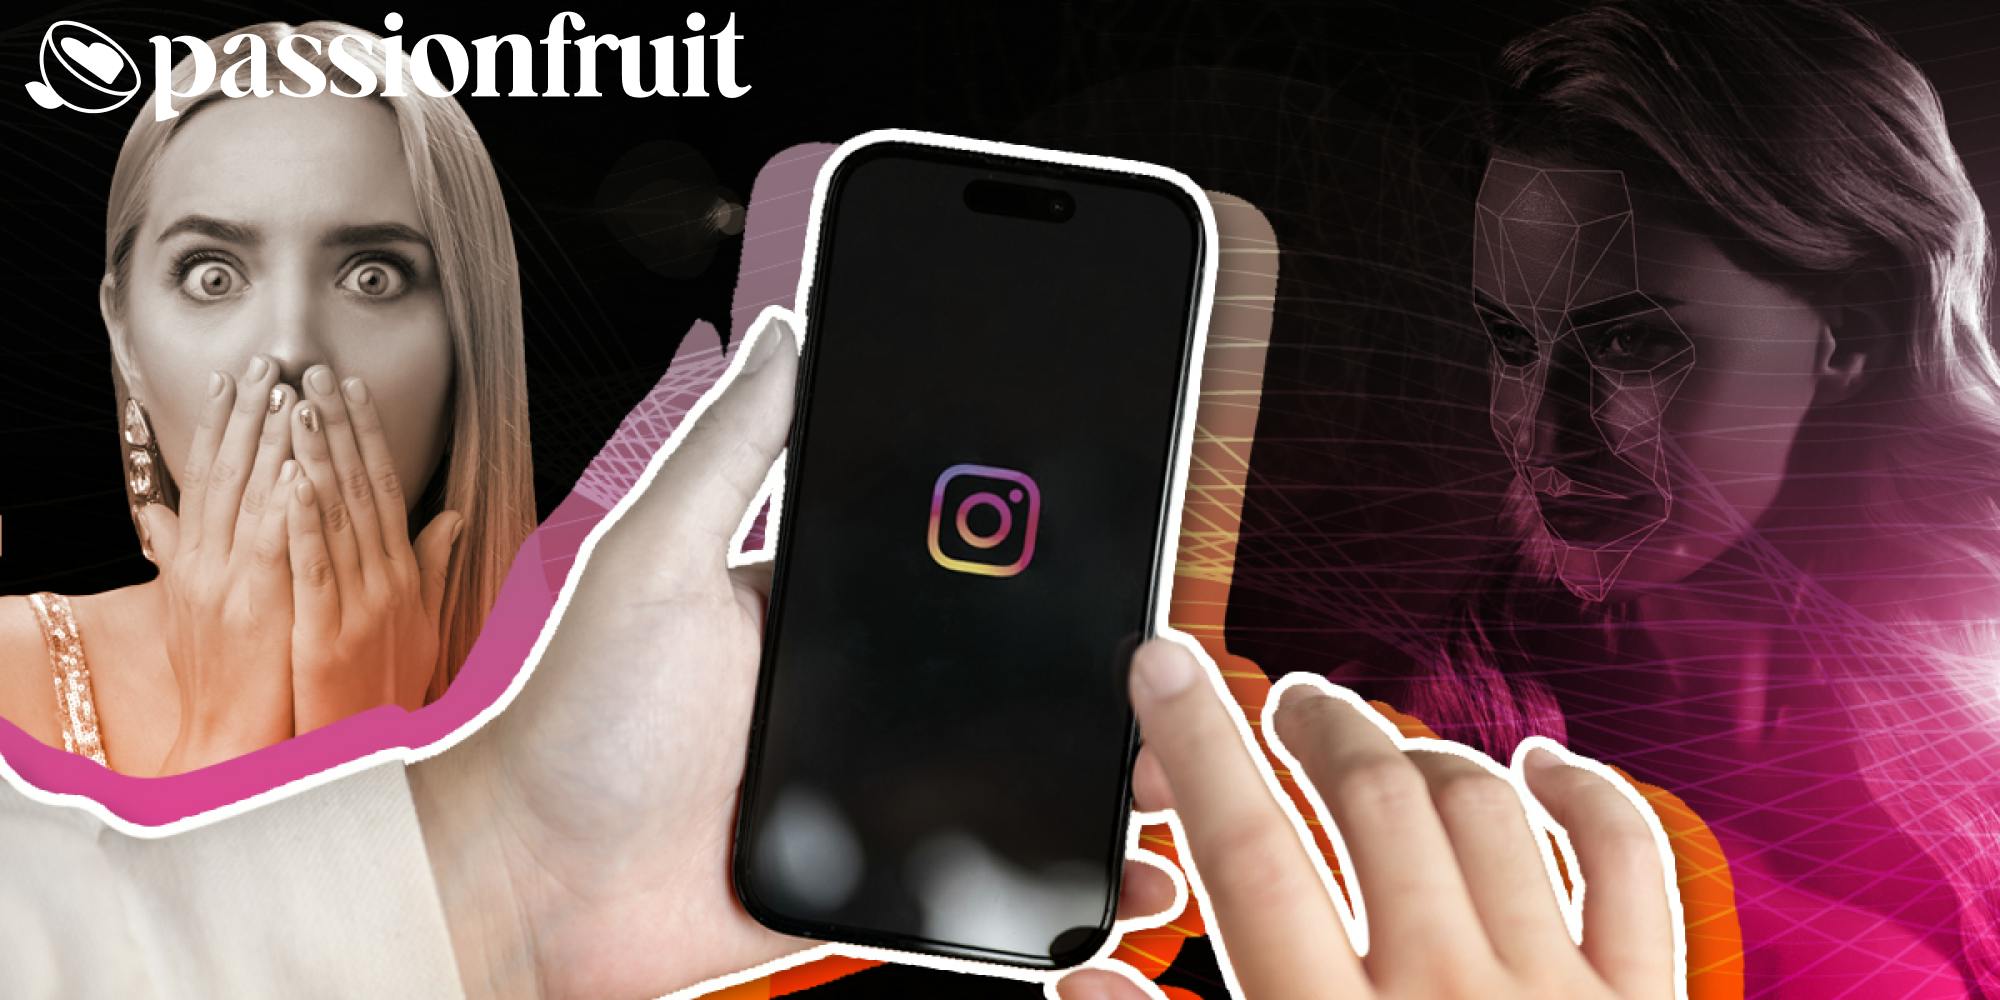 Should creators be concerned about Instagram’s AI developments?